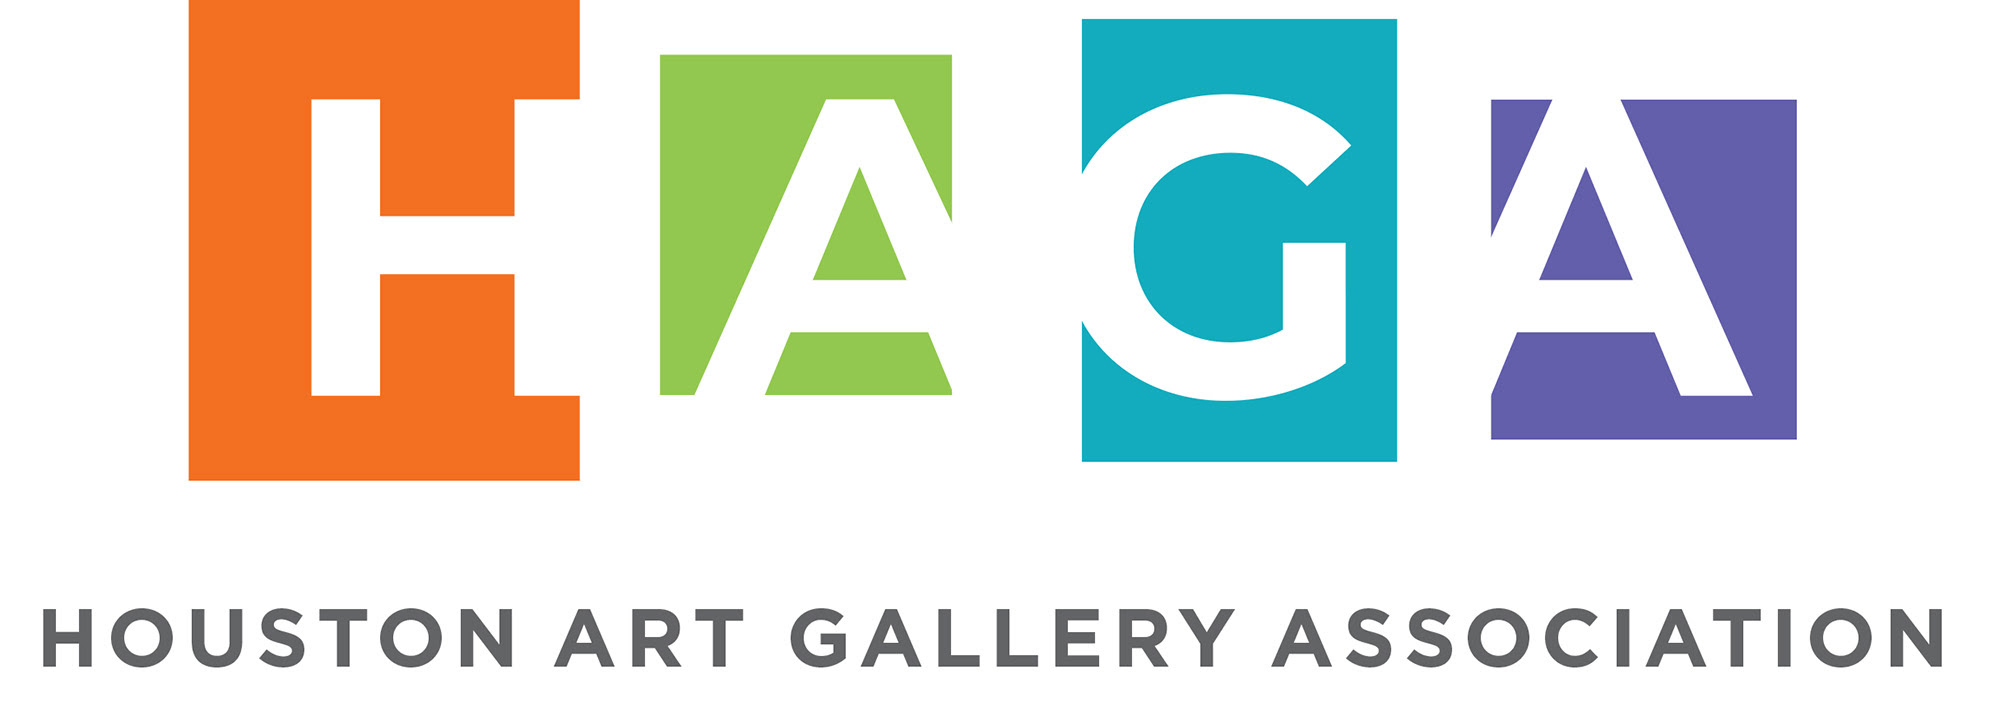 Houston Art Gallery Association Logo